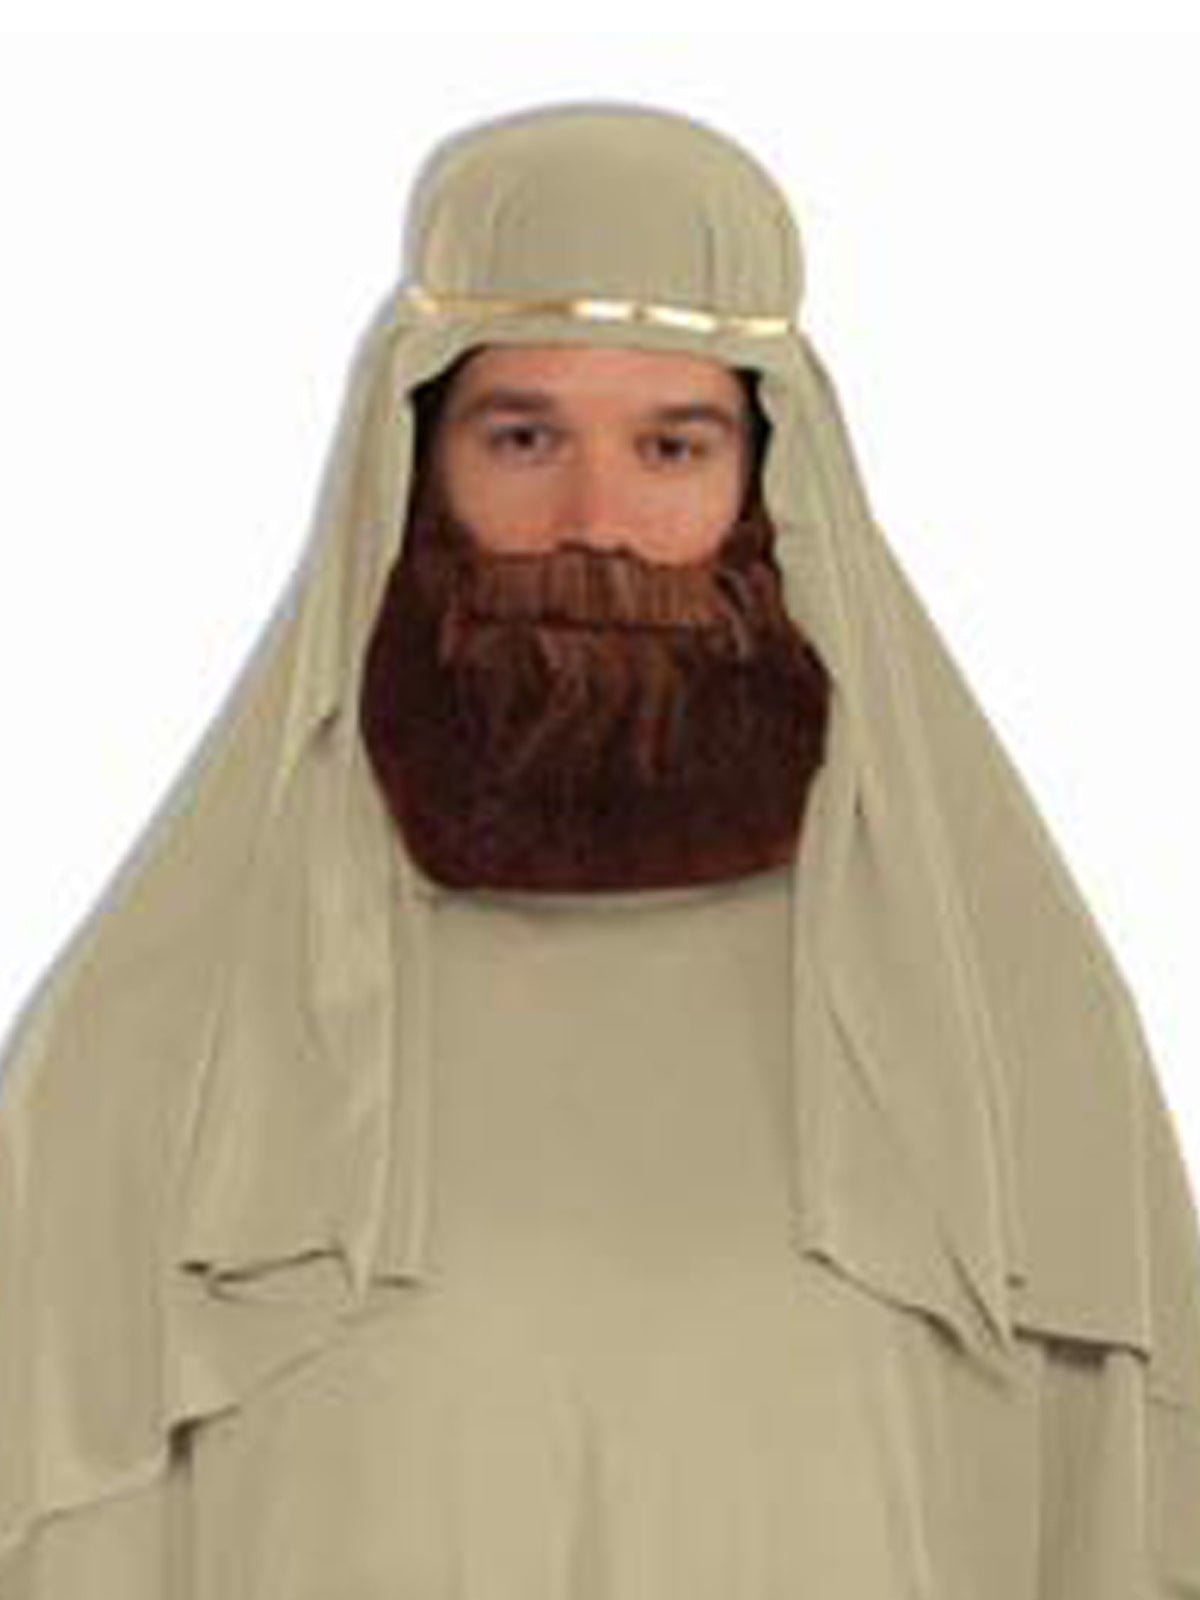 Wiseman Costume - Ivory - Size Std